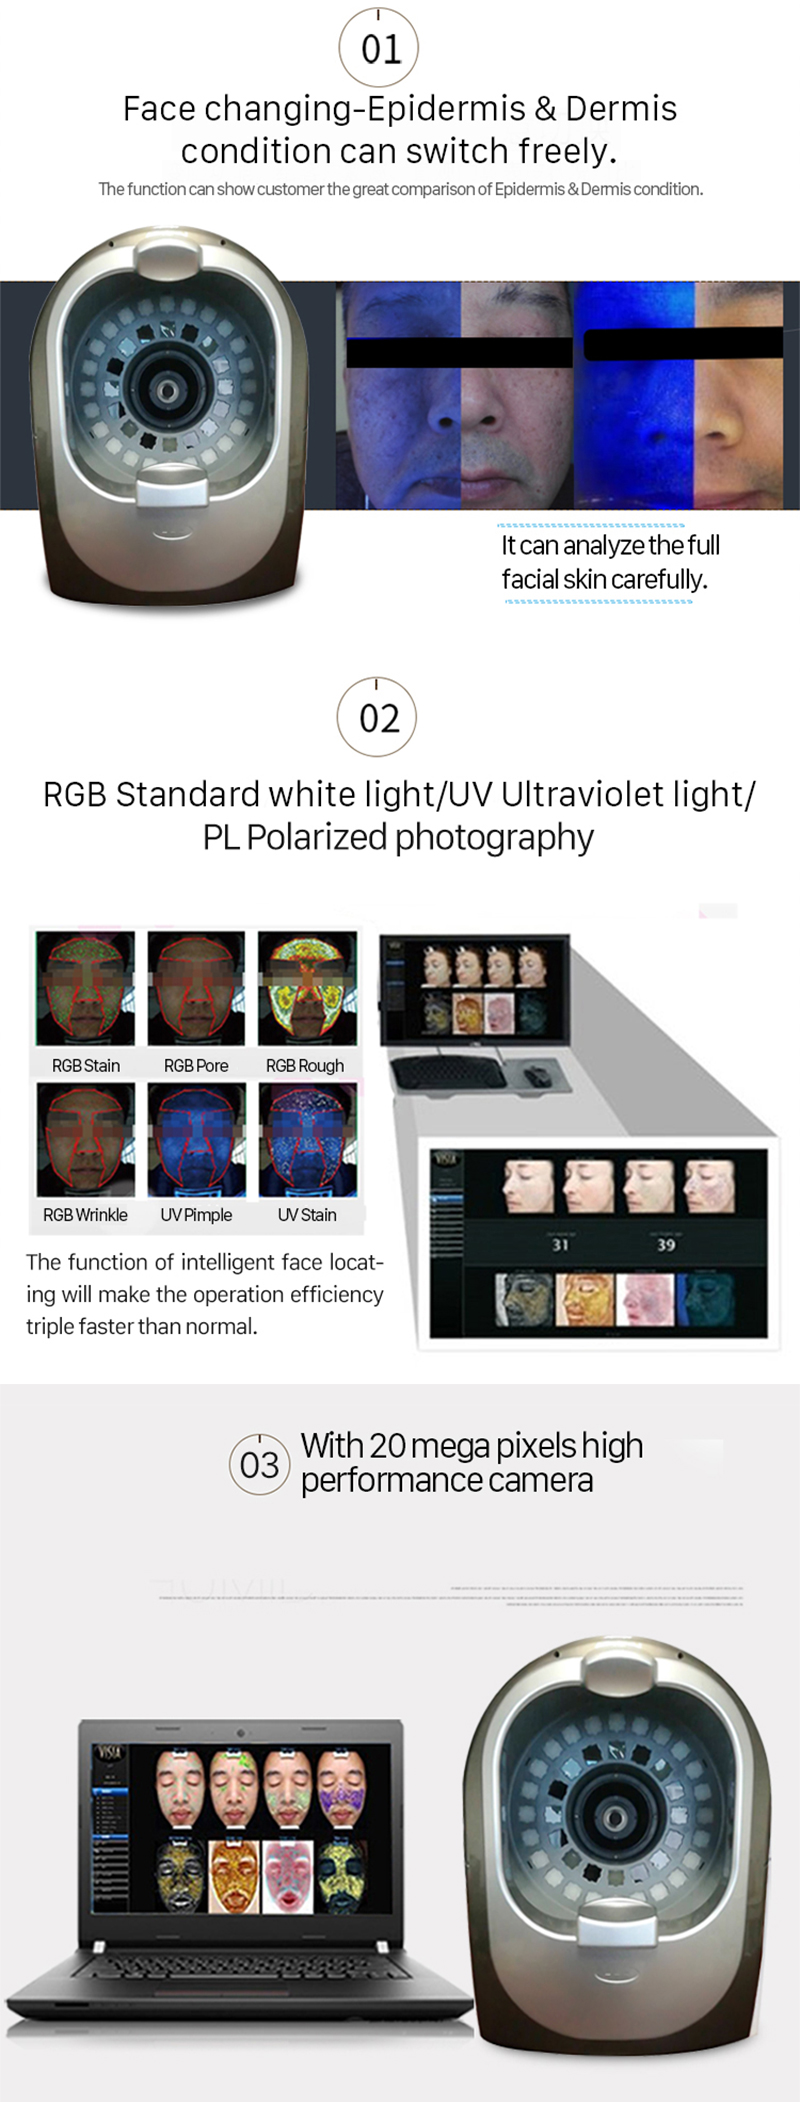 TC20s Six-Spectrum Facial Magic Mirror Skin Care Analyzer Analyze Facial Skin Conditions